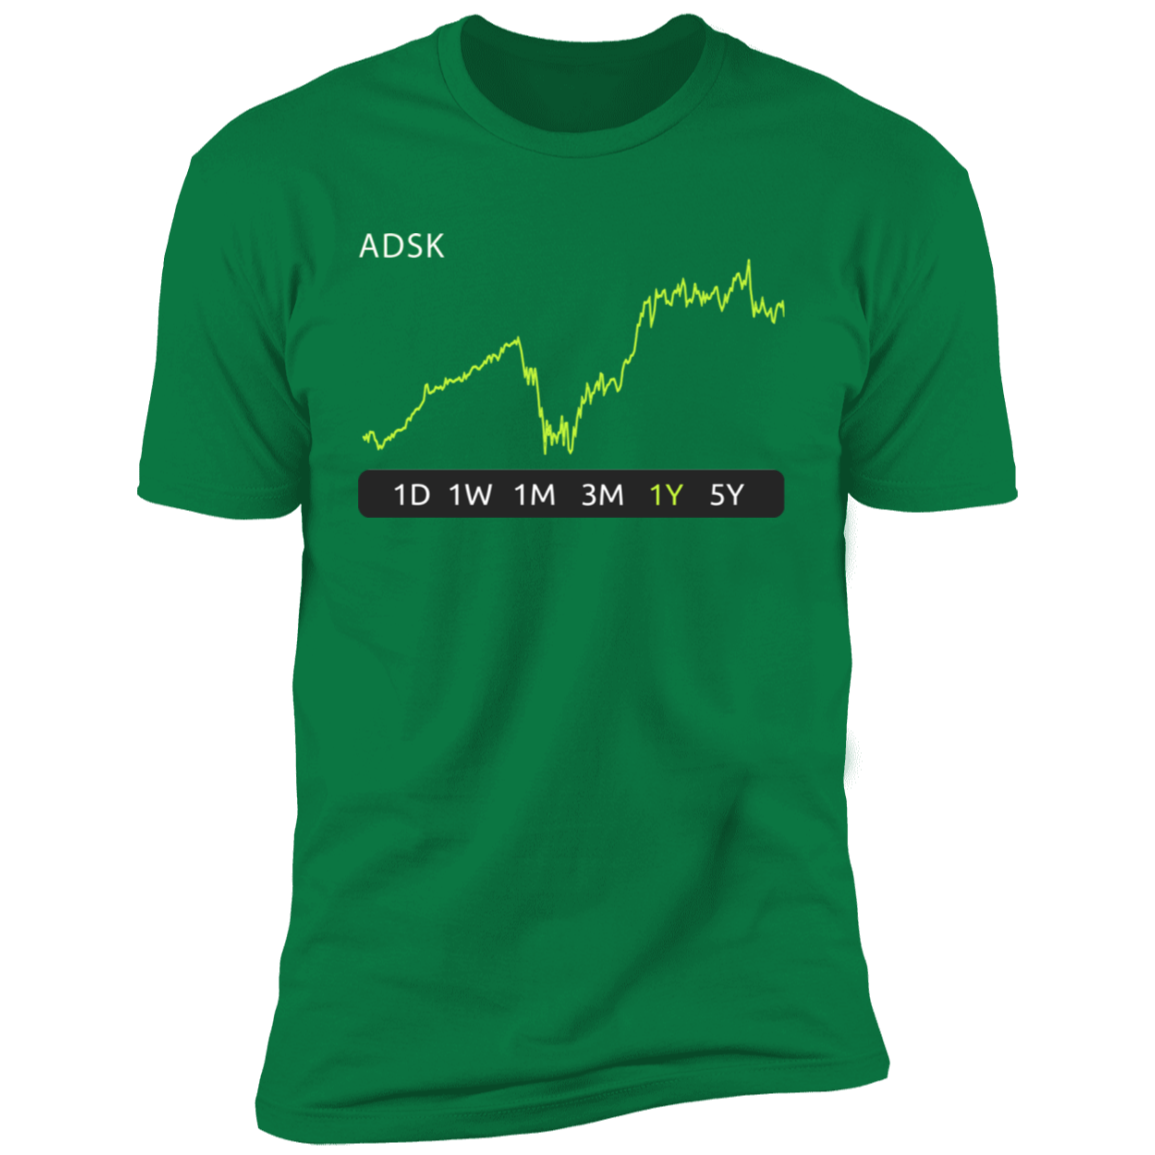 ADSK Stock 1y Premium T-Shirt